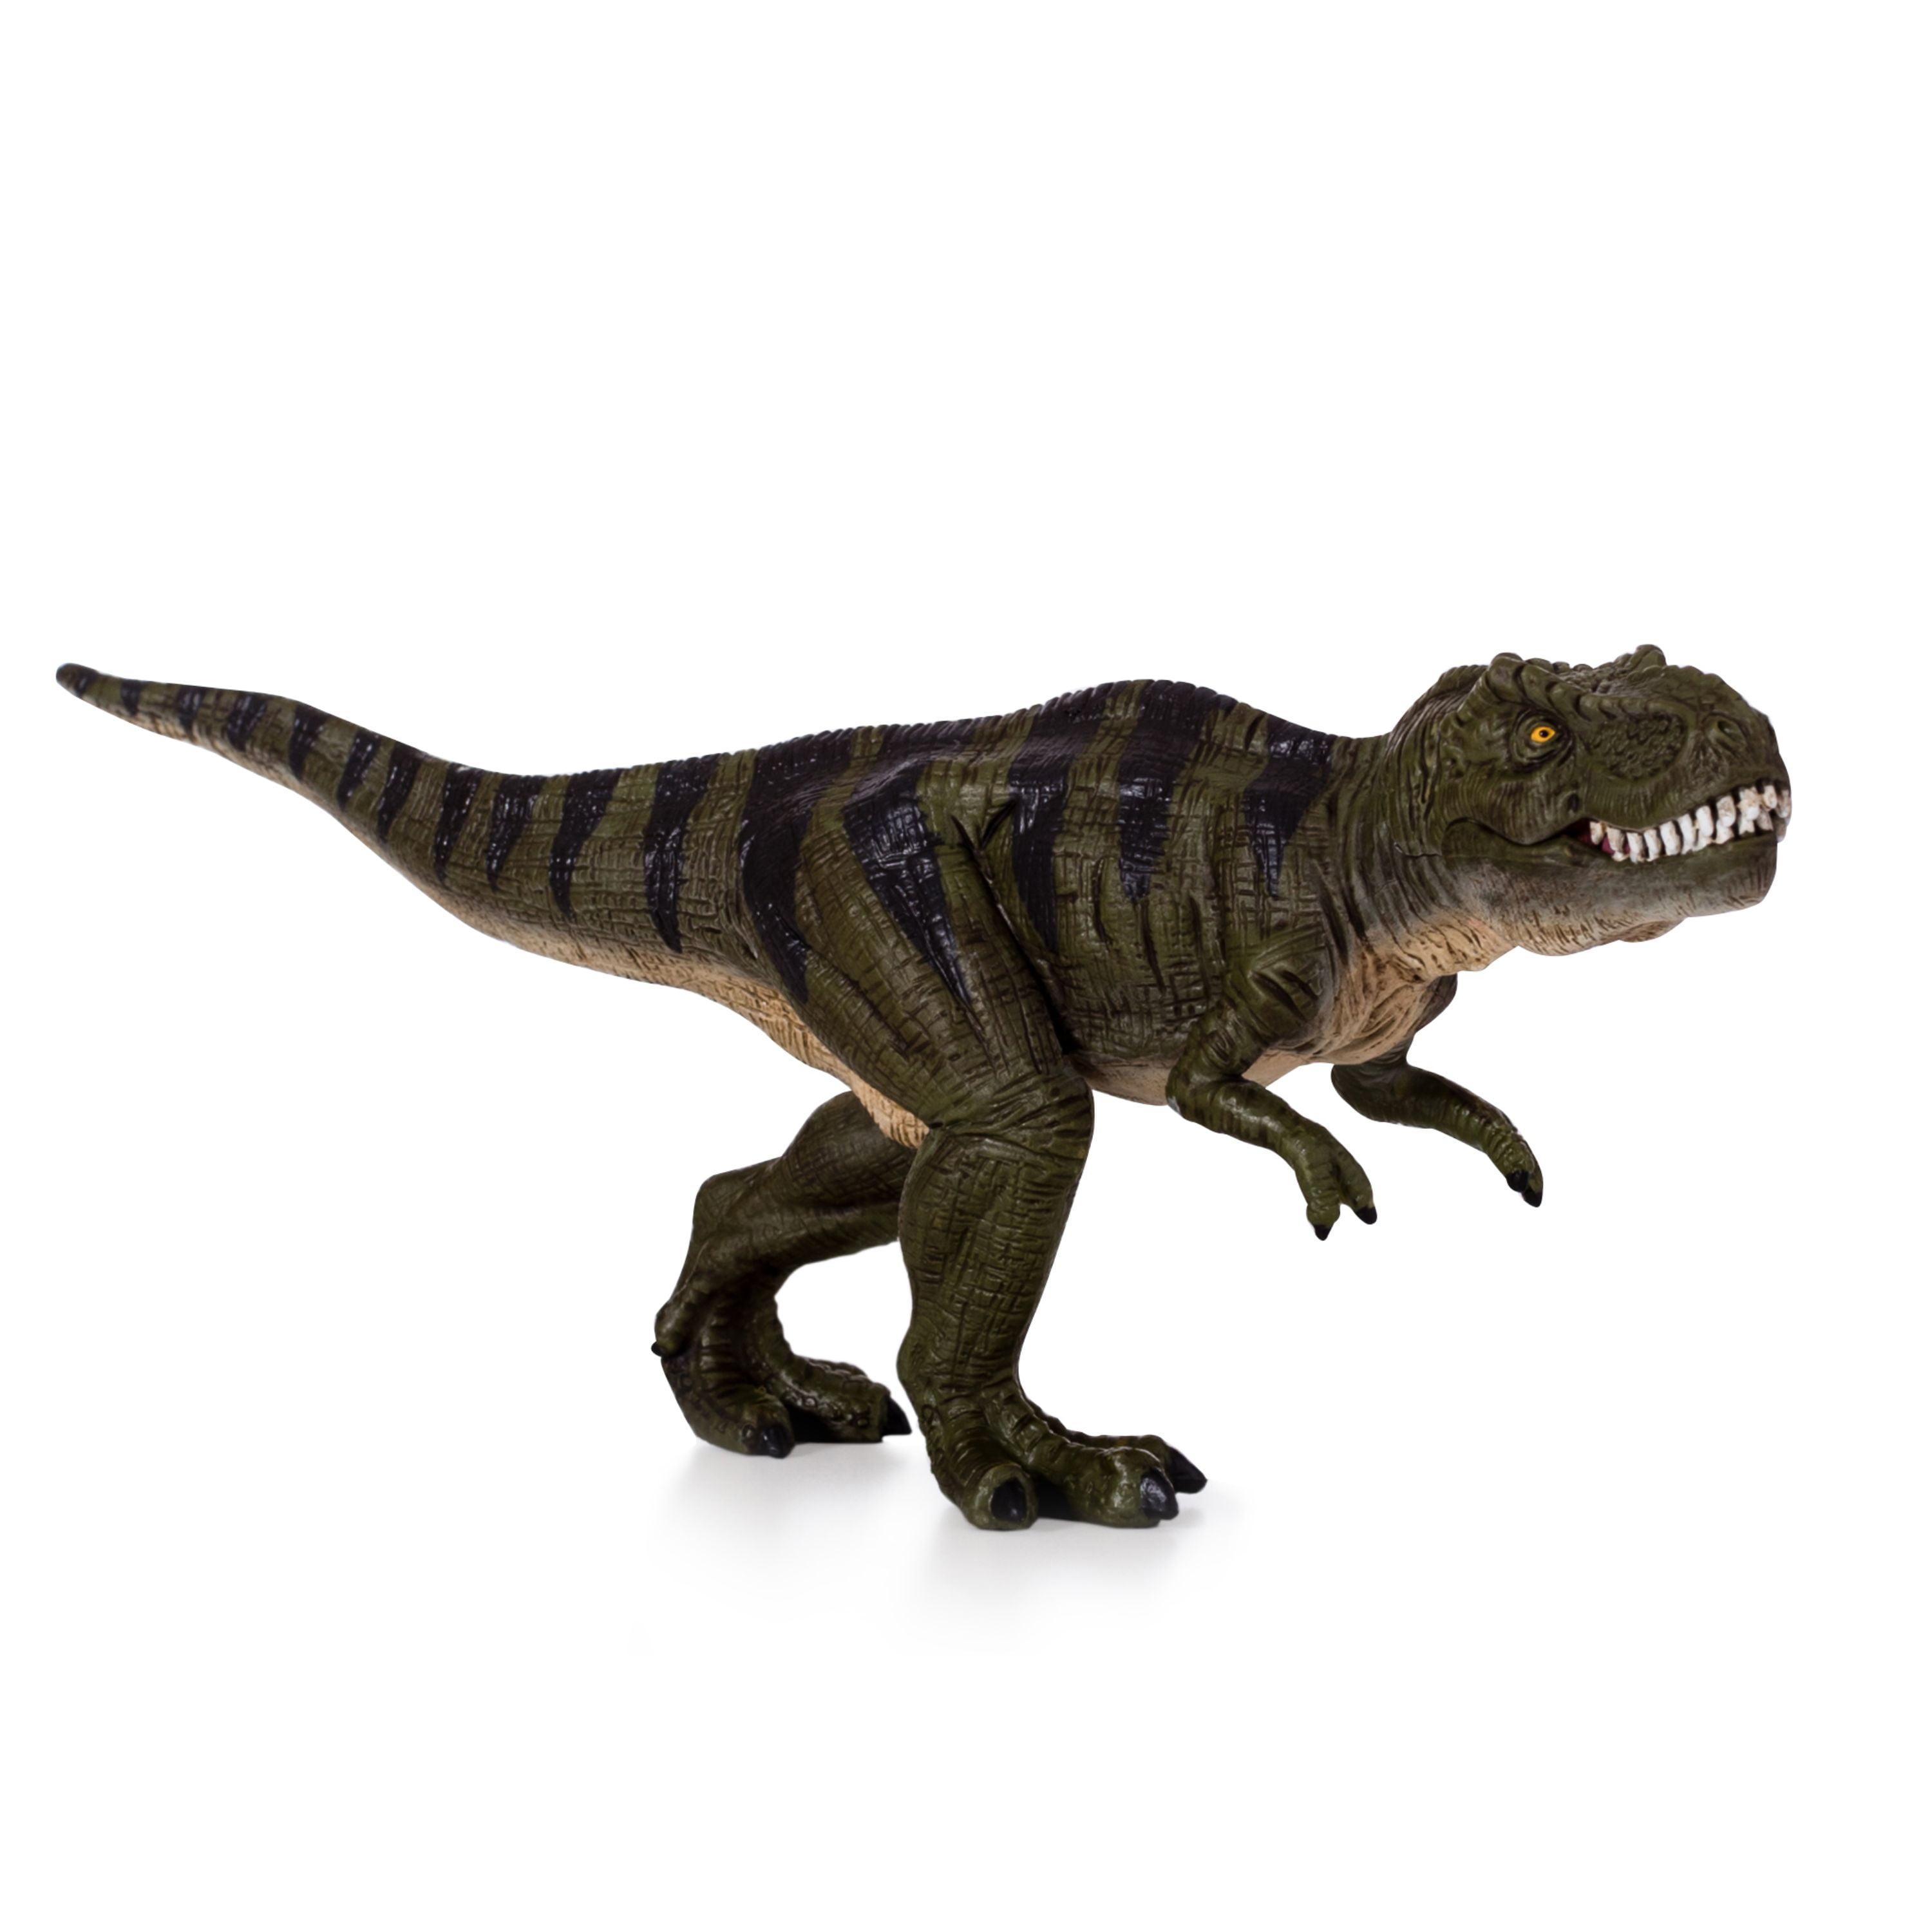 HHei_K Kids Education Toys Simulated Dinosaur Model Toy Dinosaur Gift